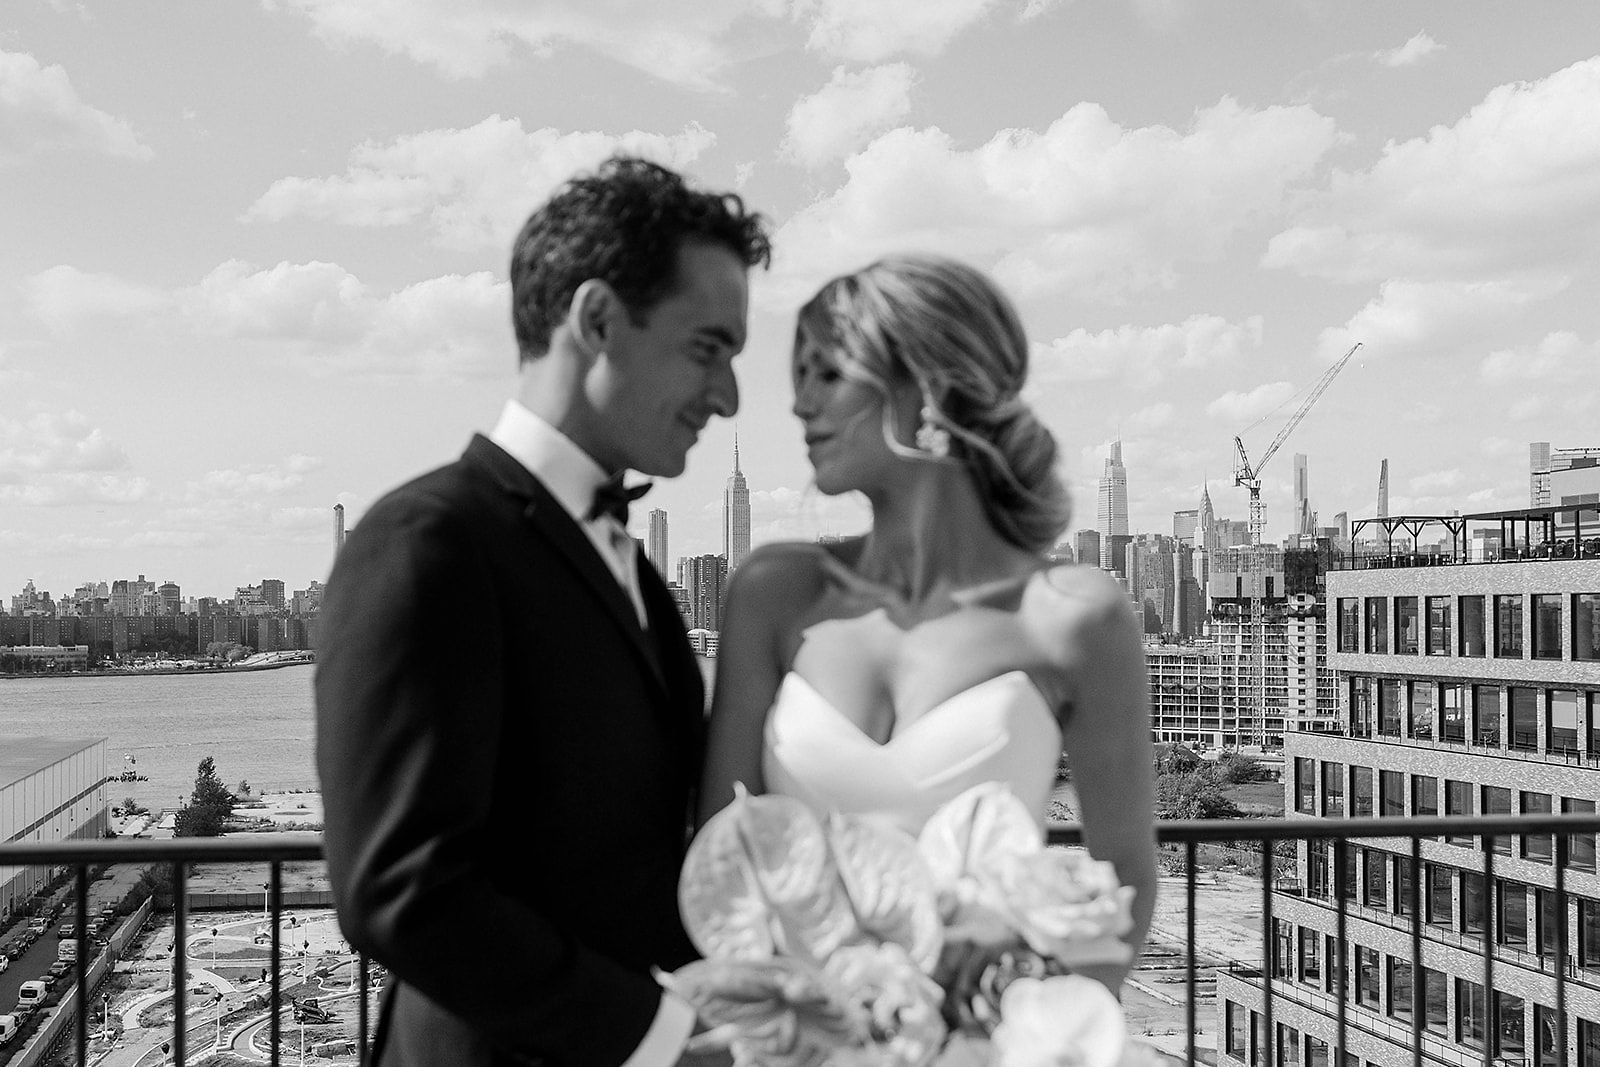 Mariage à Brooklyn au Wythe Hotel - Claire + Anthony - Blog Mariage Madame C